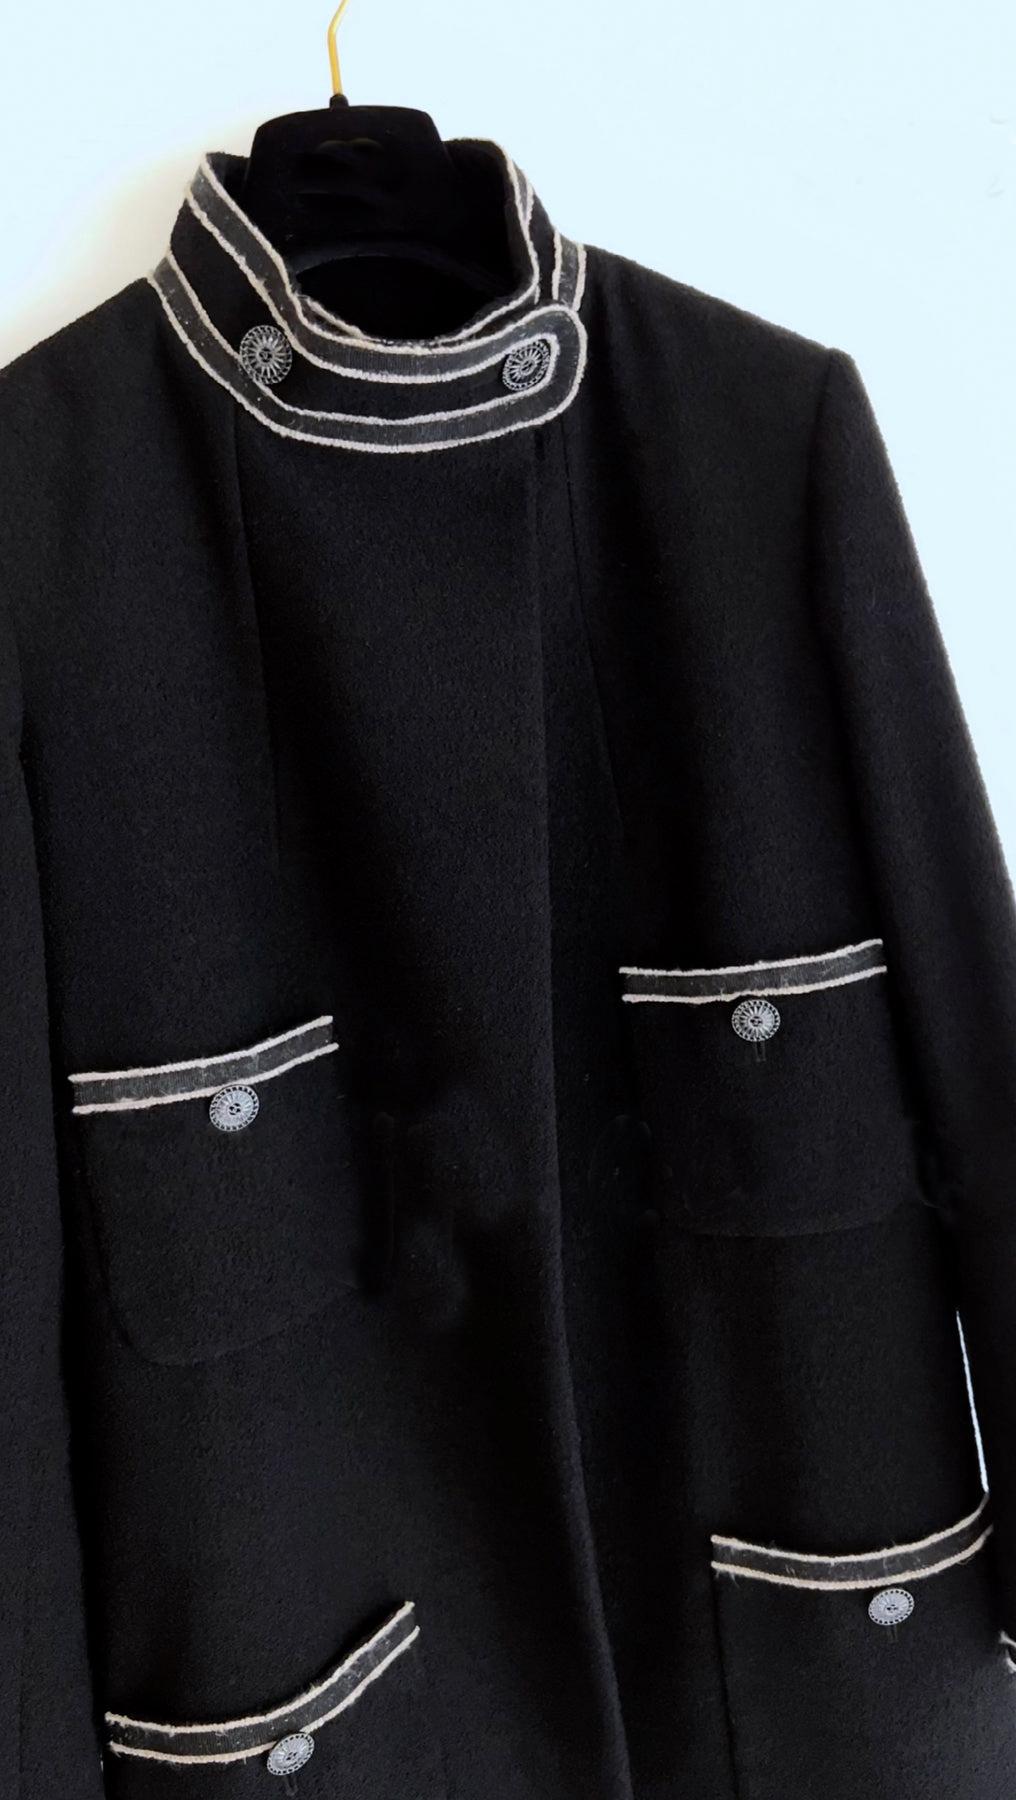 Chanel Paris / Singapore Runway Black Tweed Coat 6